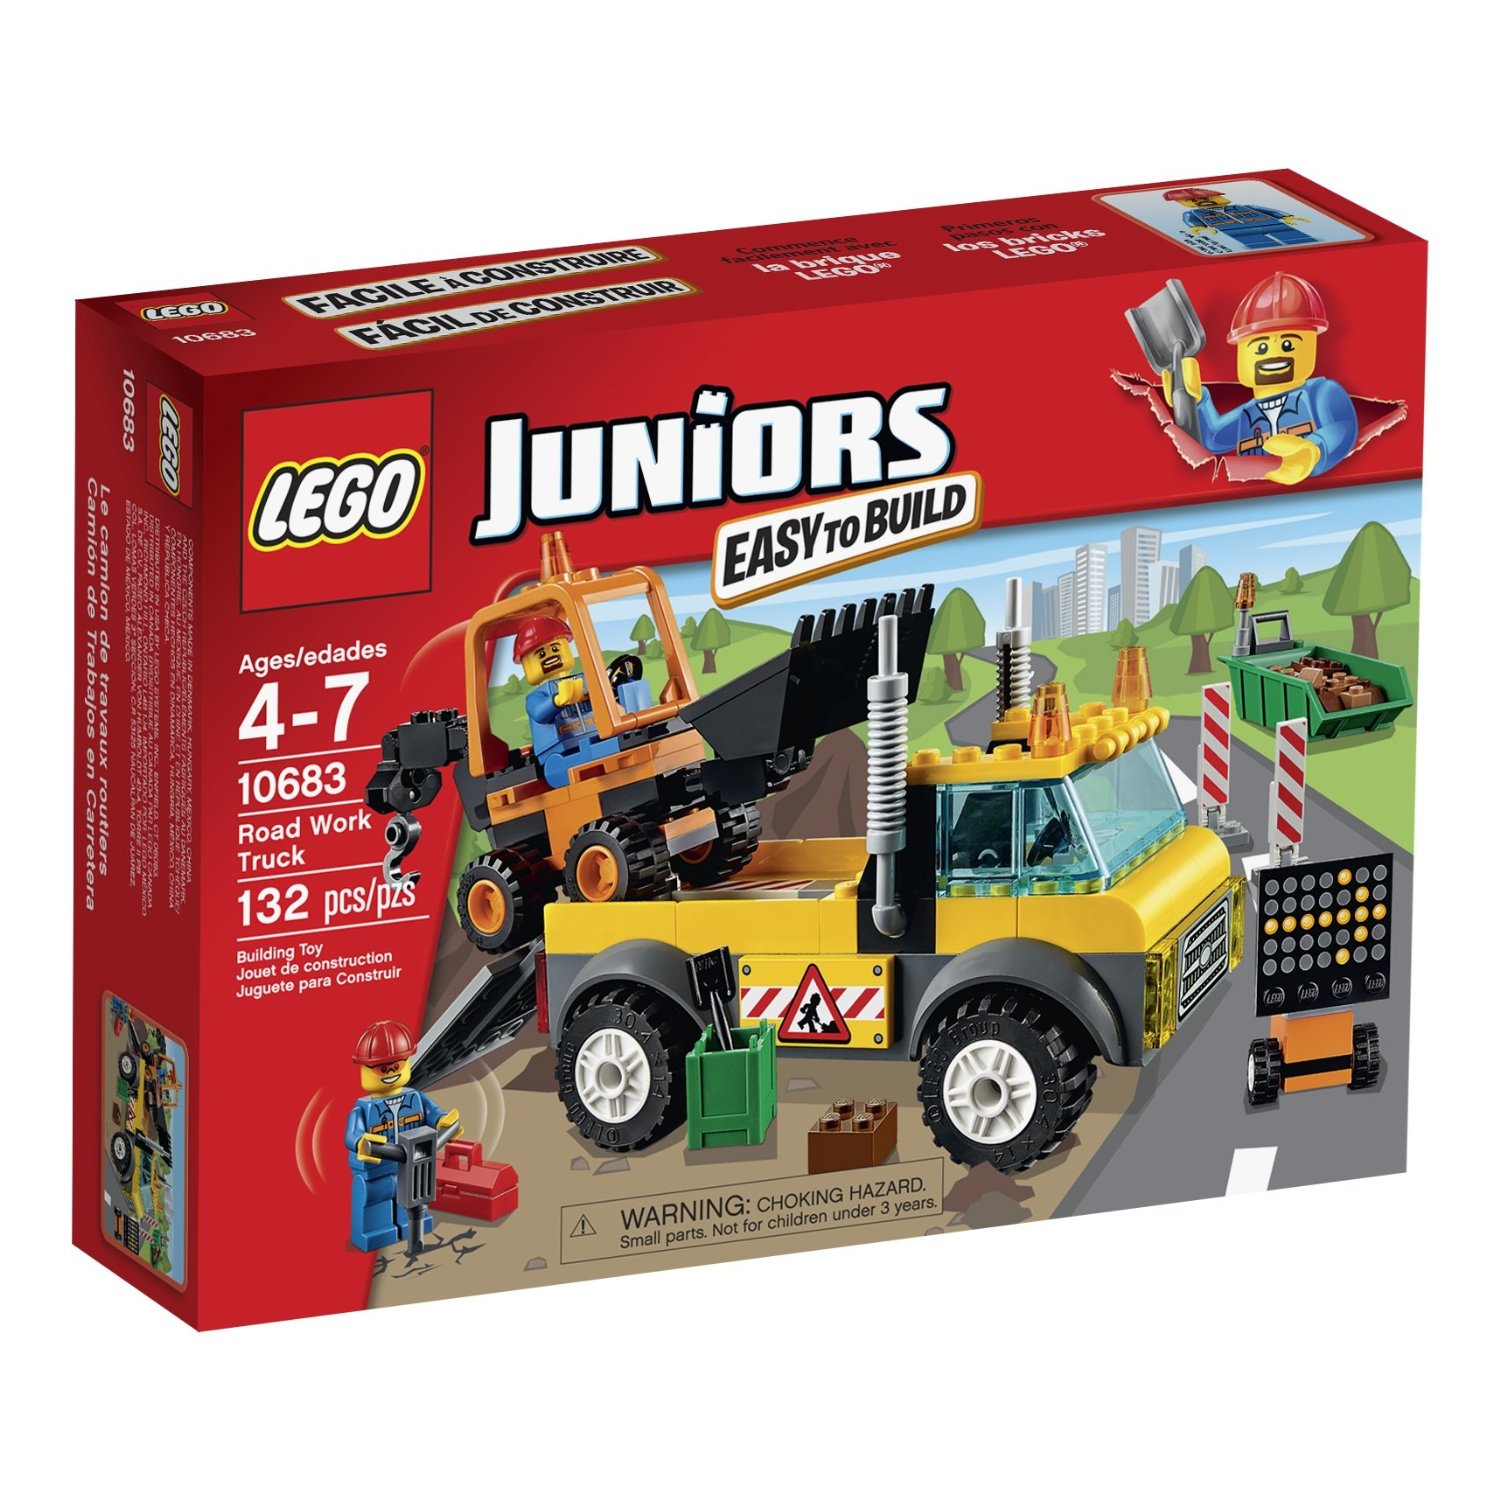 LEGO Juniors Road Work Truck Building Kit – Just $14.89!